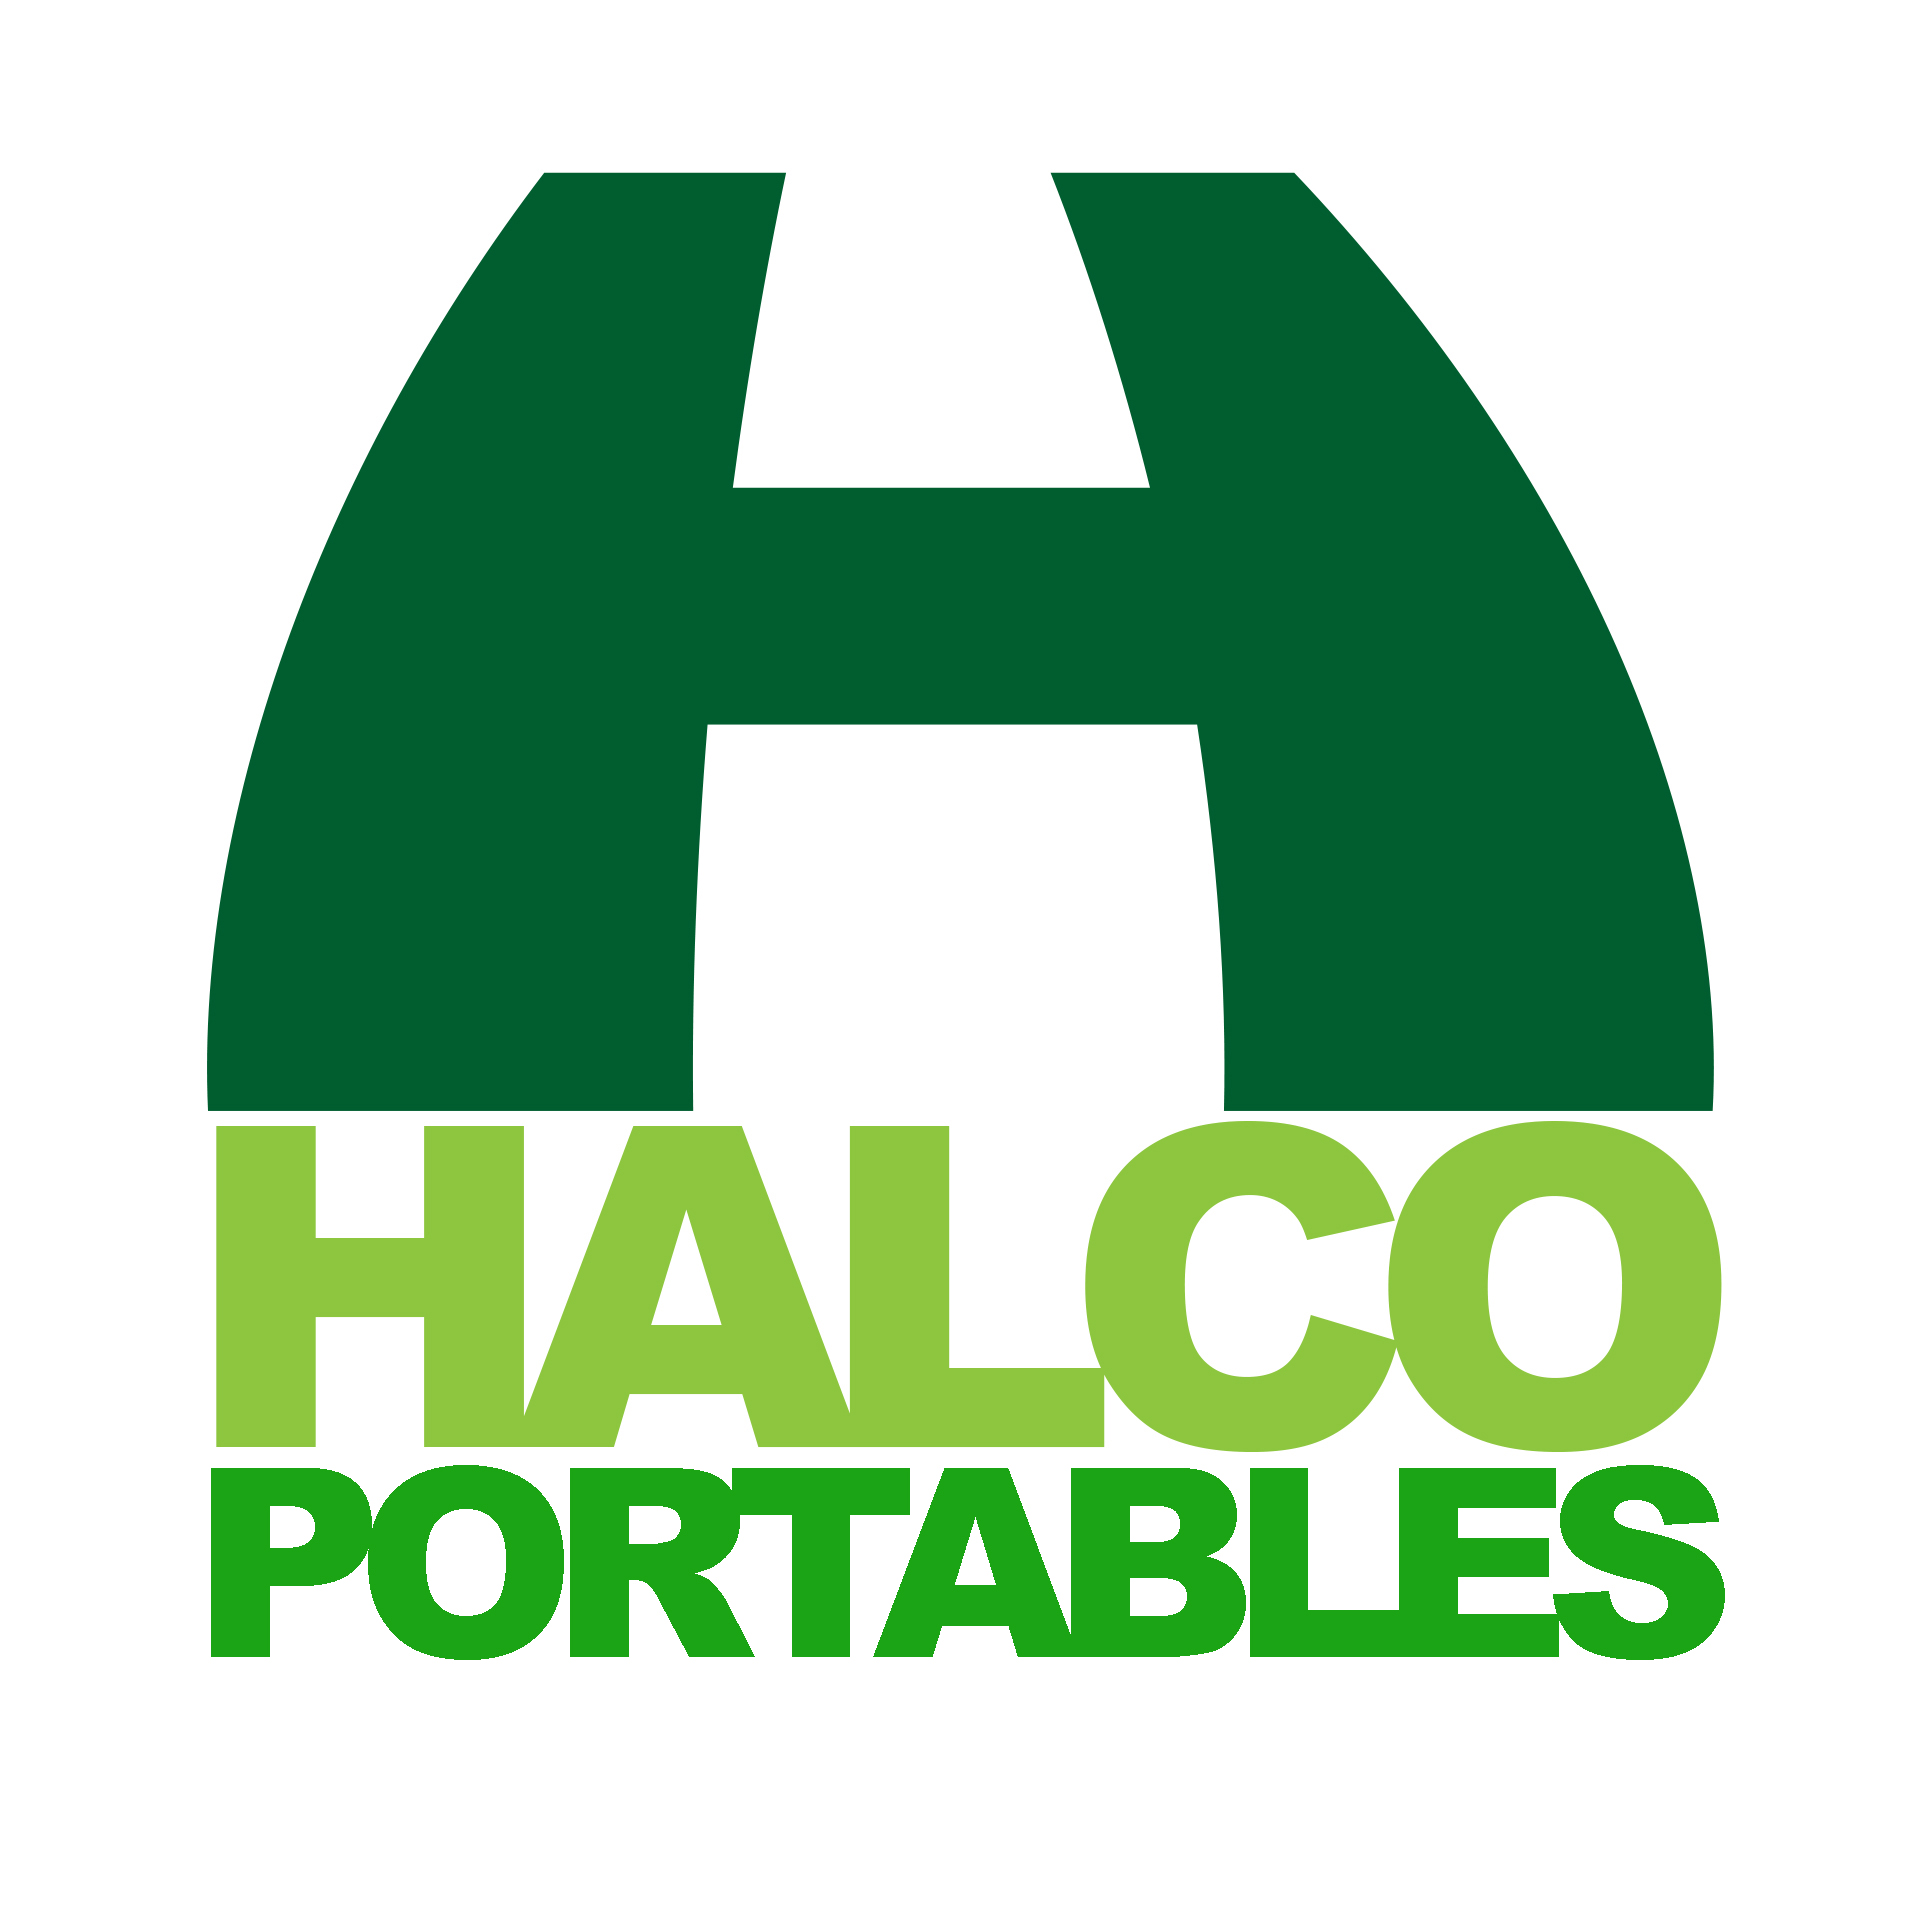 Halco Portables logo.